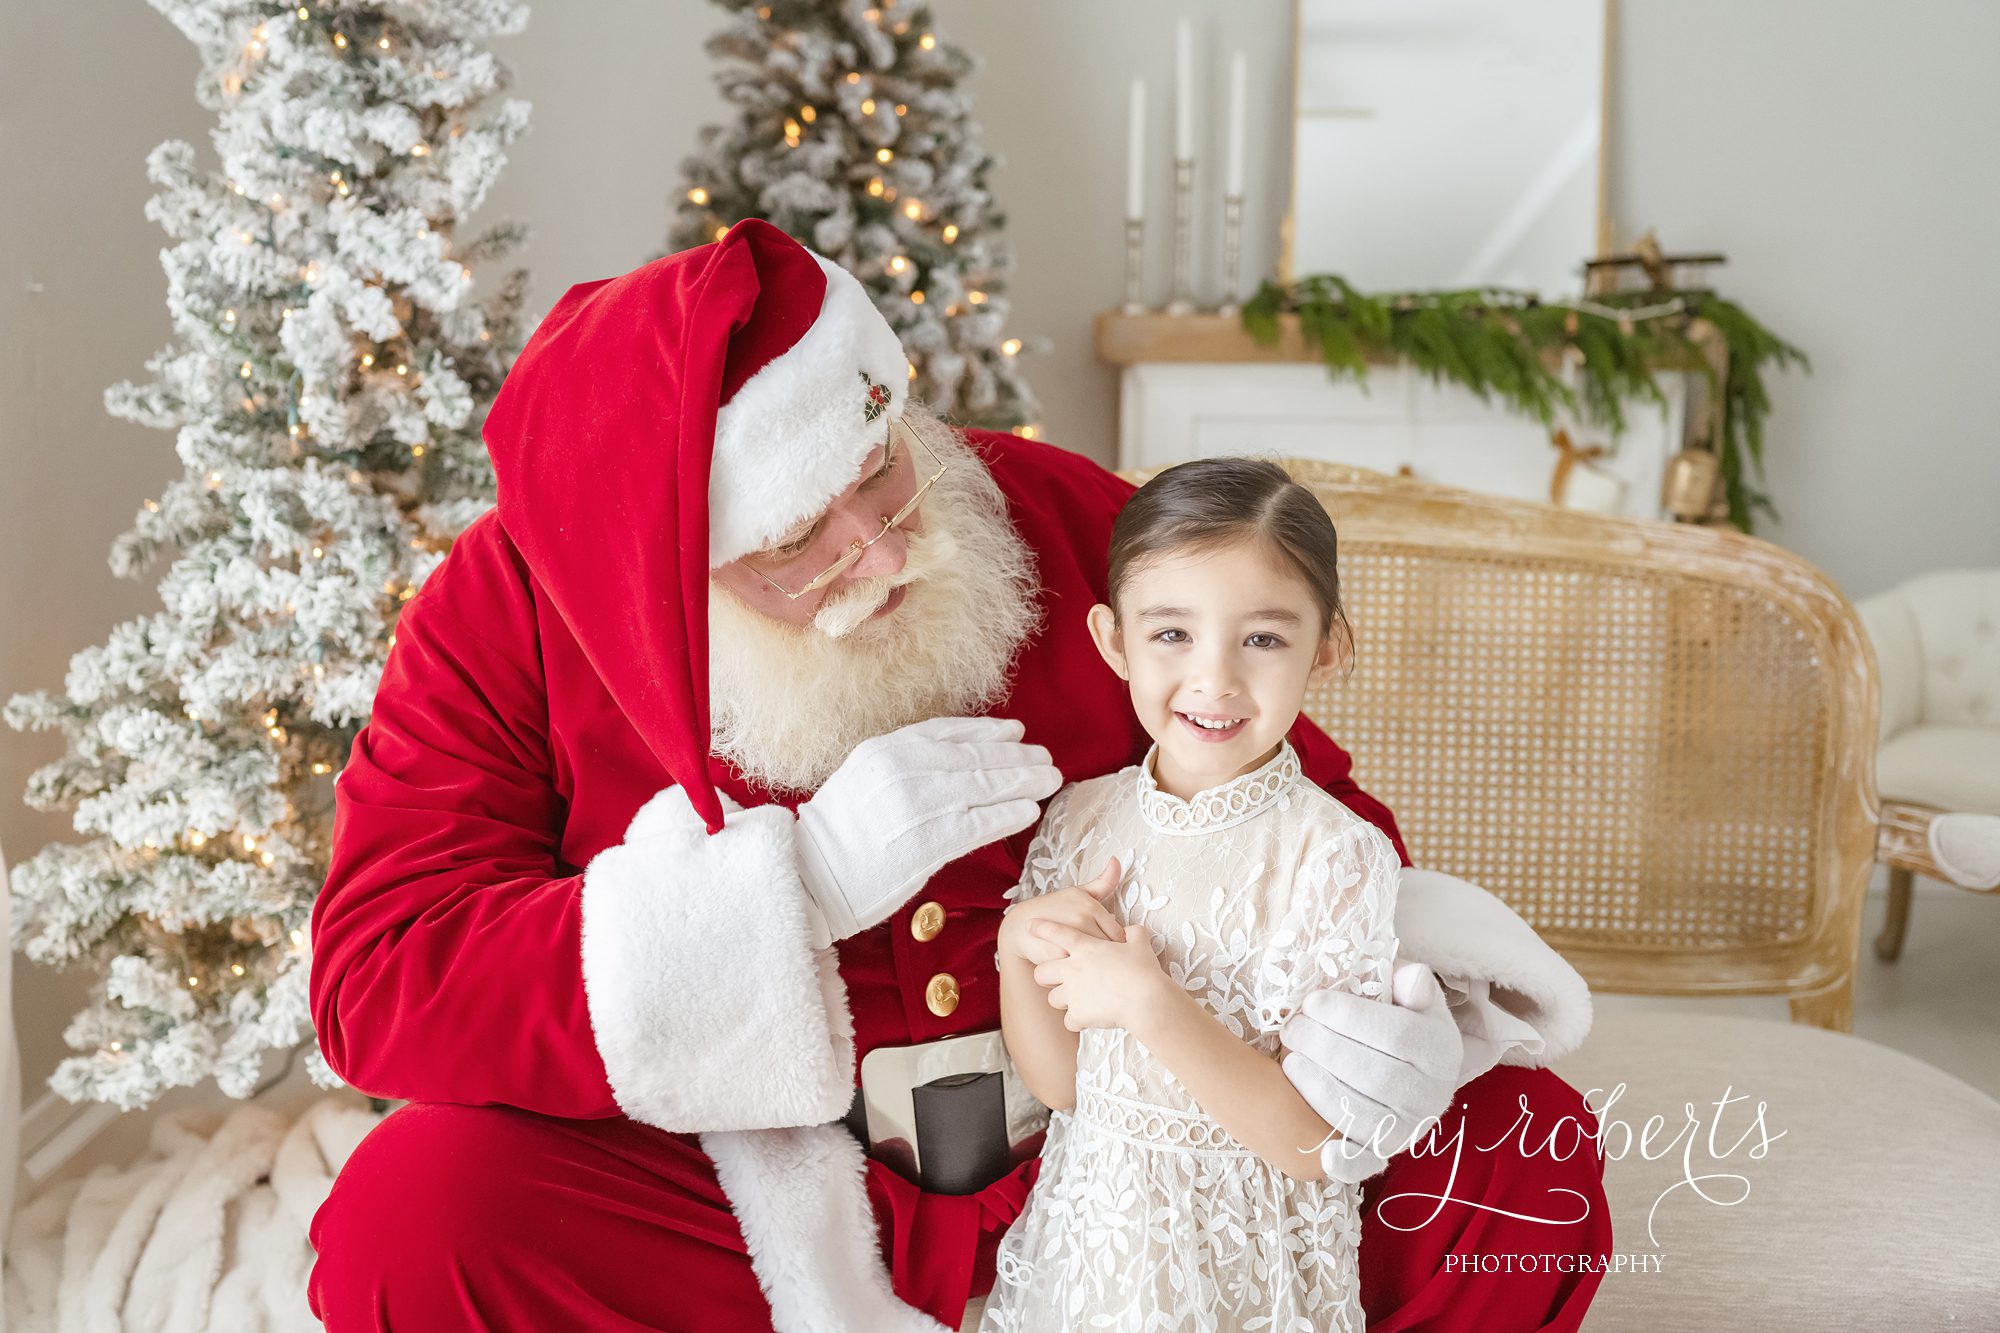 © Reaj Roberts Photography Scottsdale Arizona Photos with Santa | Santa Claus poses